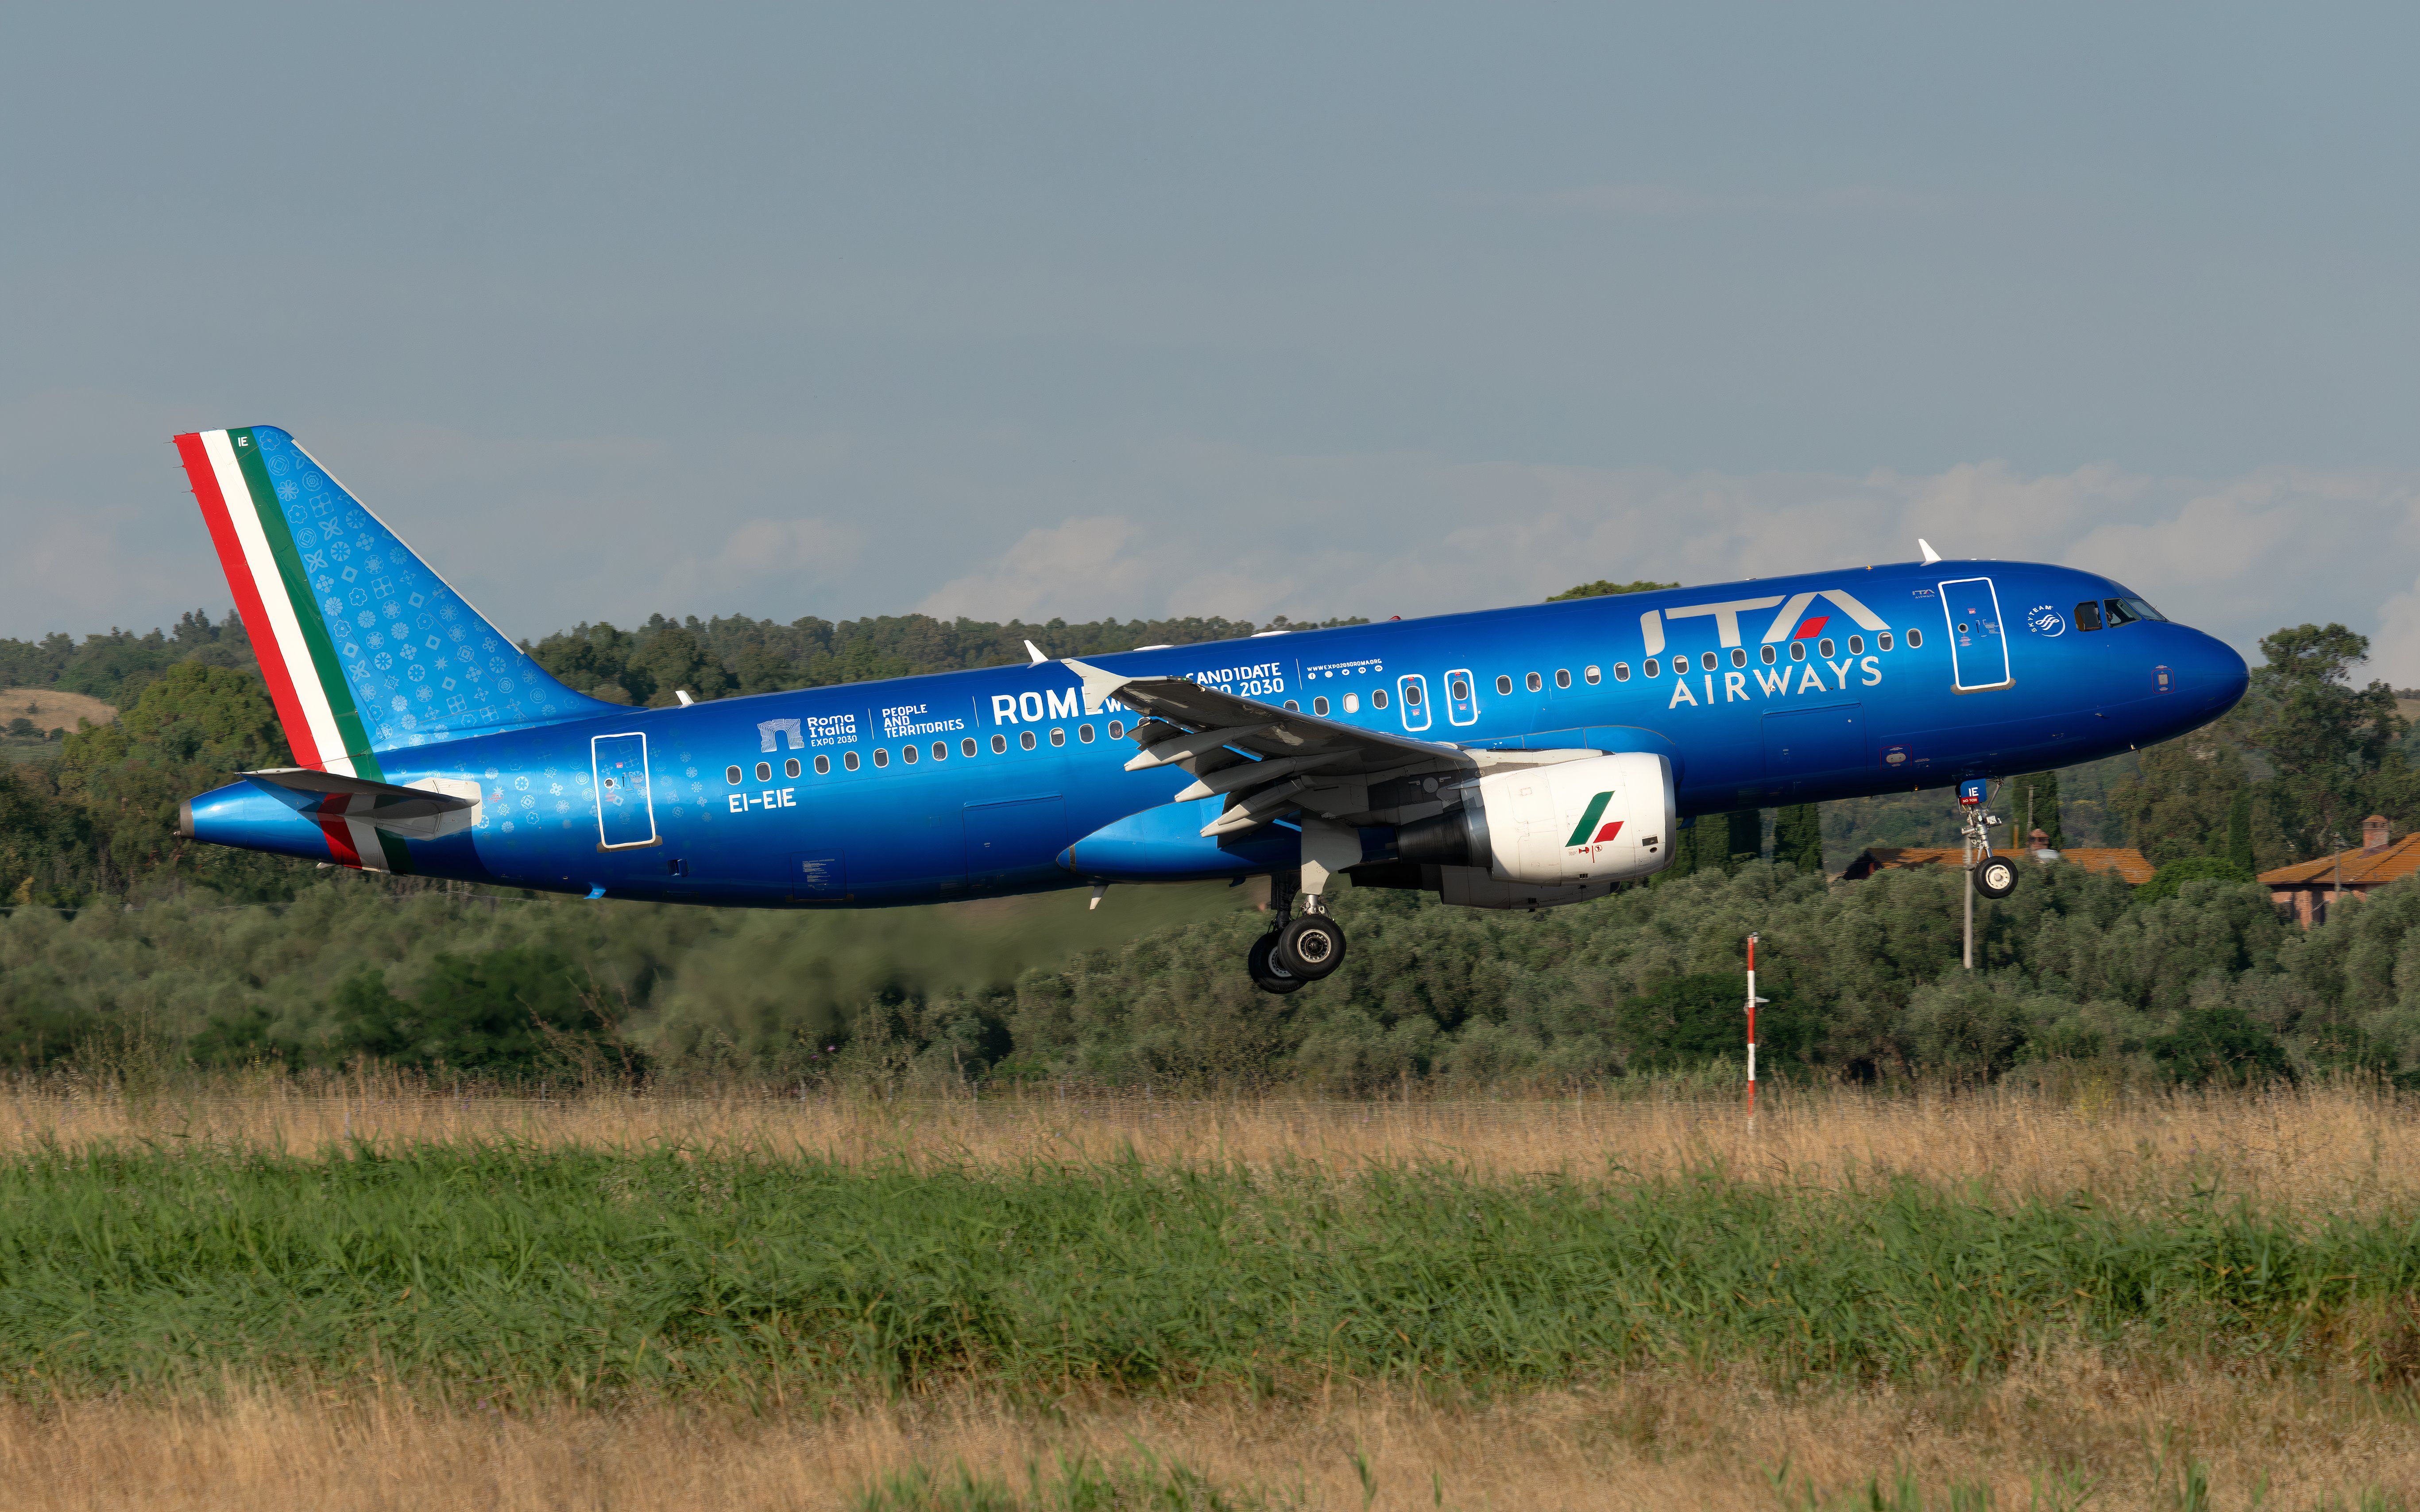 EI-EIE ITA Airways (Rome Expo 2030 Candidate Stickers) Airbus A320-216(1)